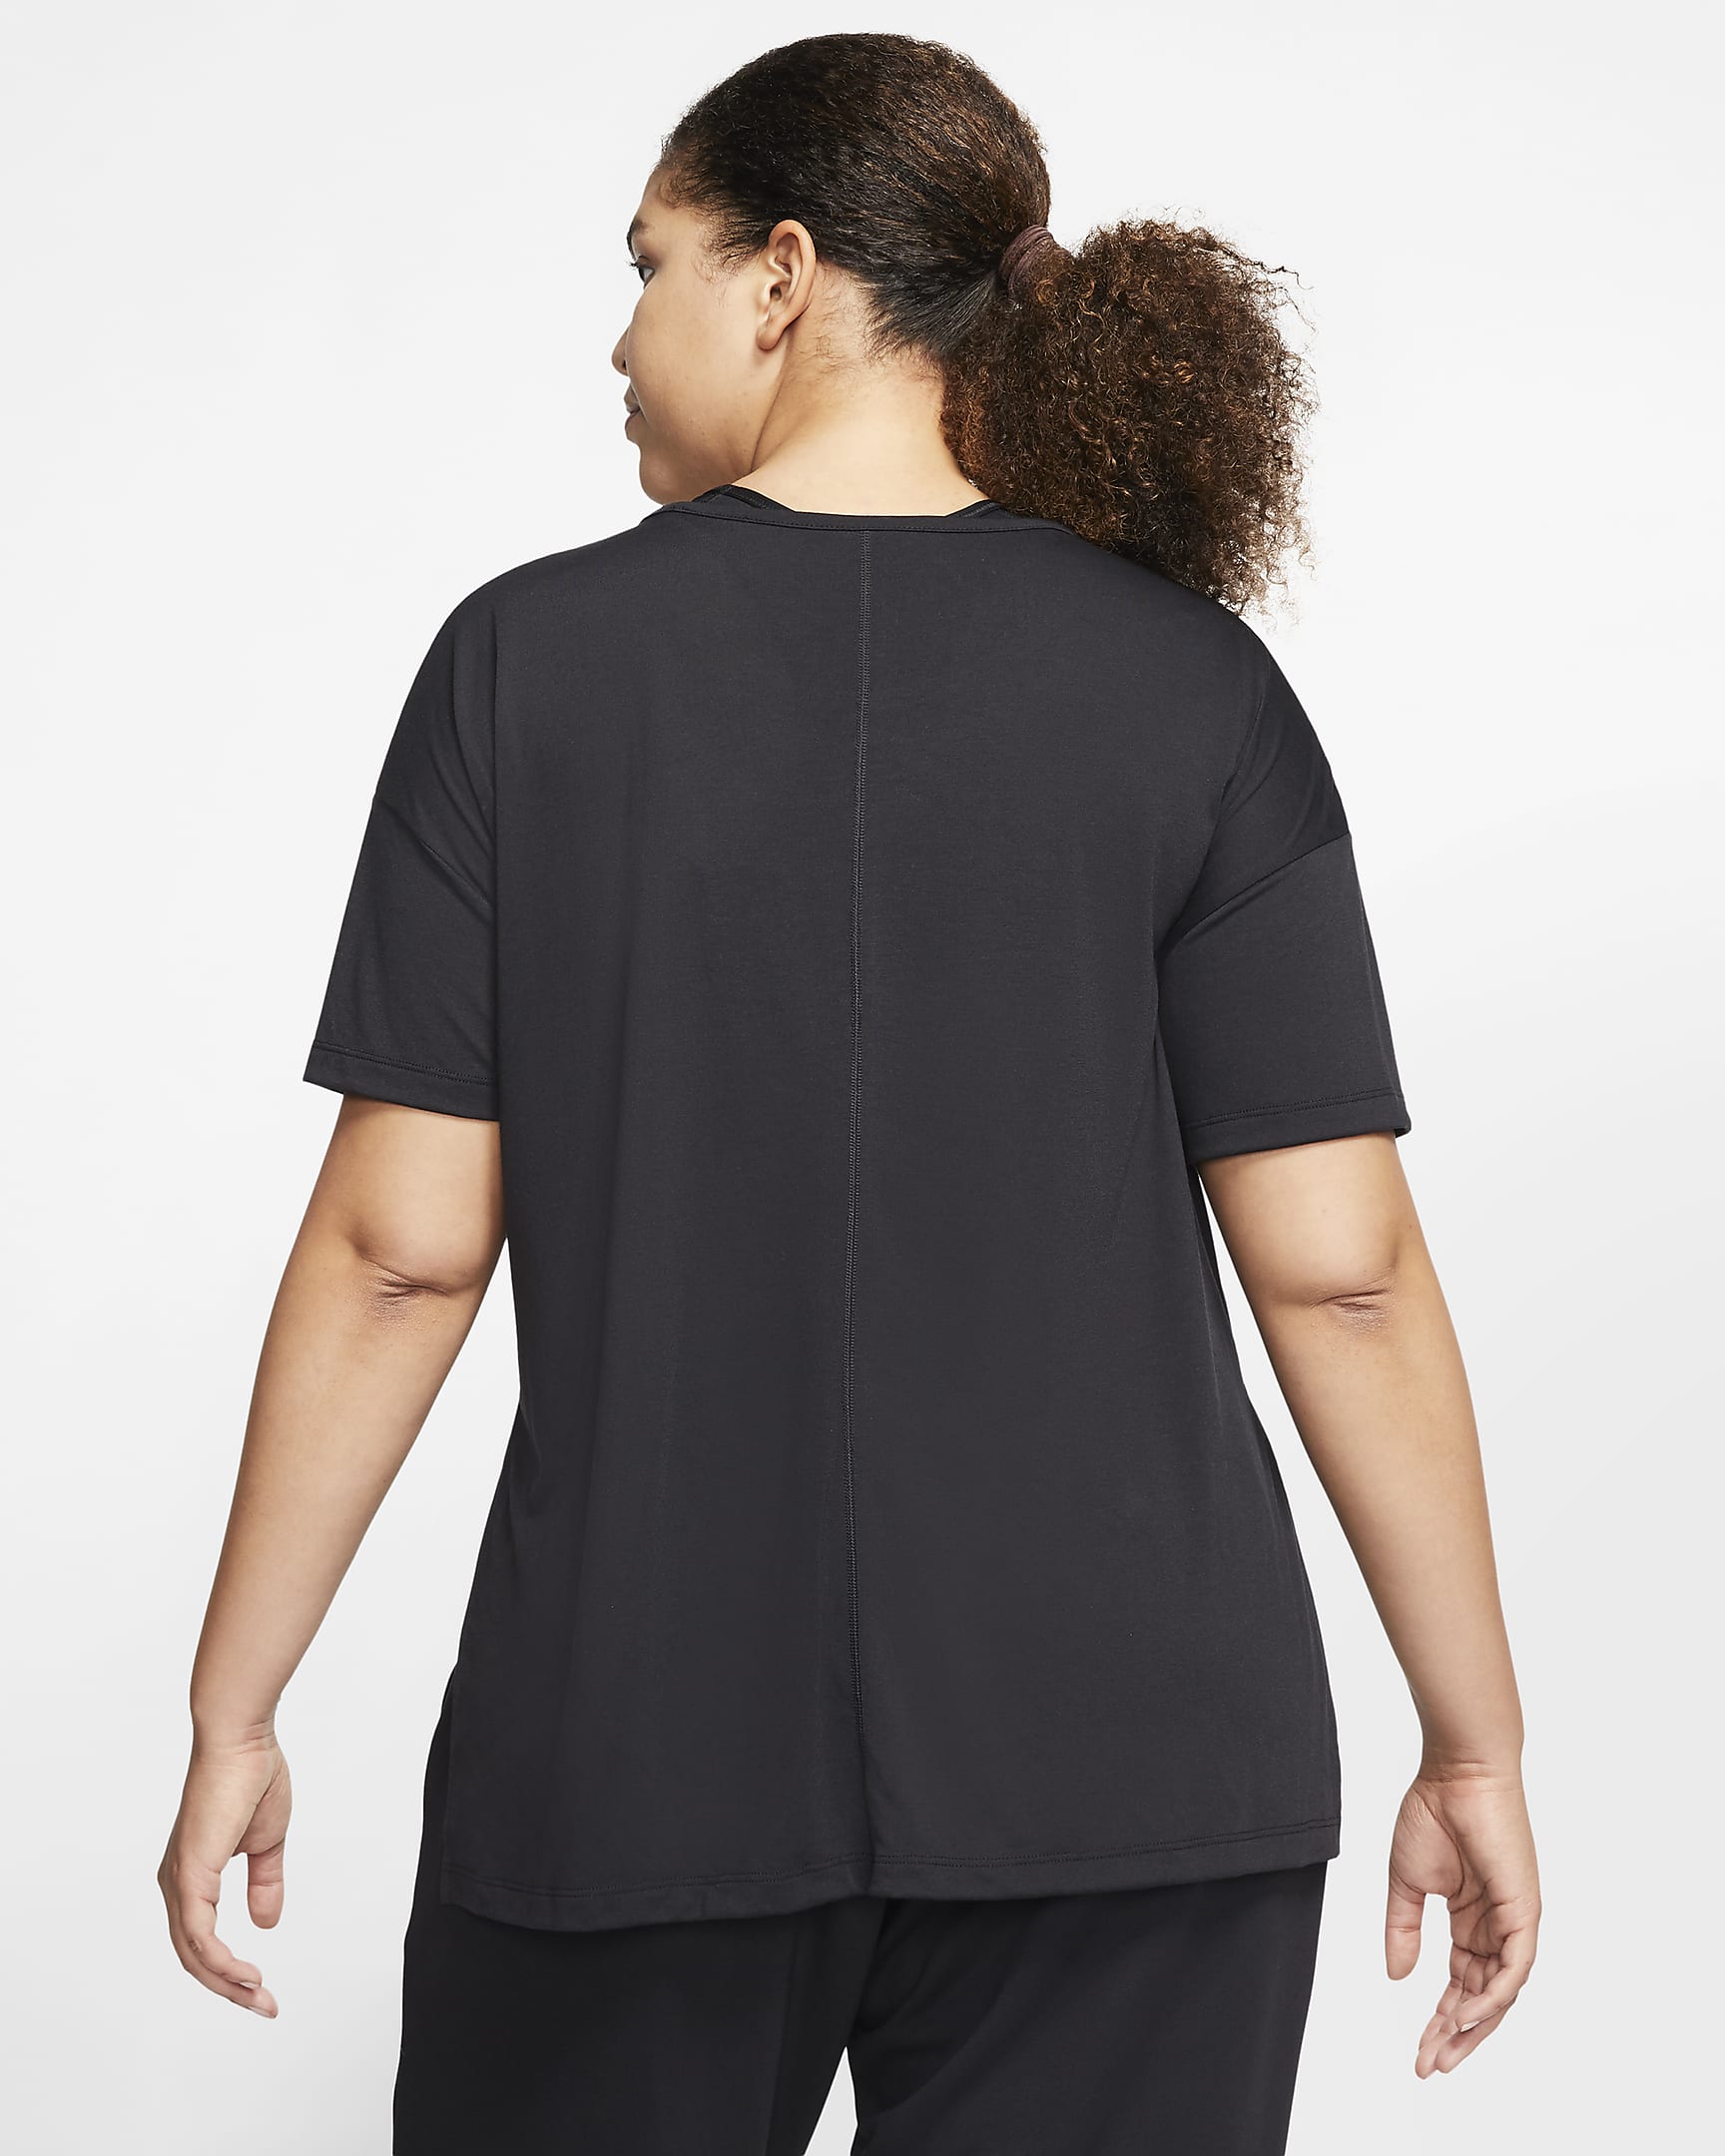 Nike Yoga Women's Short-Sleeve Top (Plus Size). Nike.com